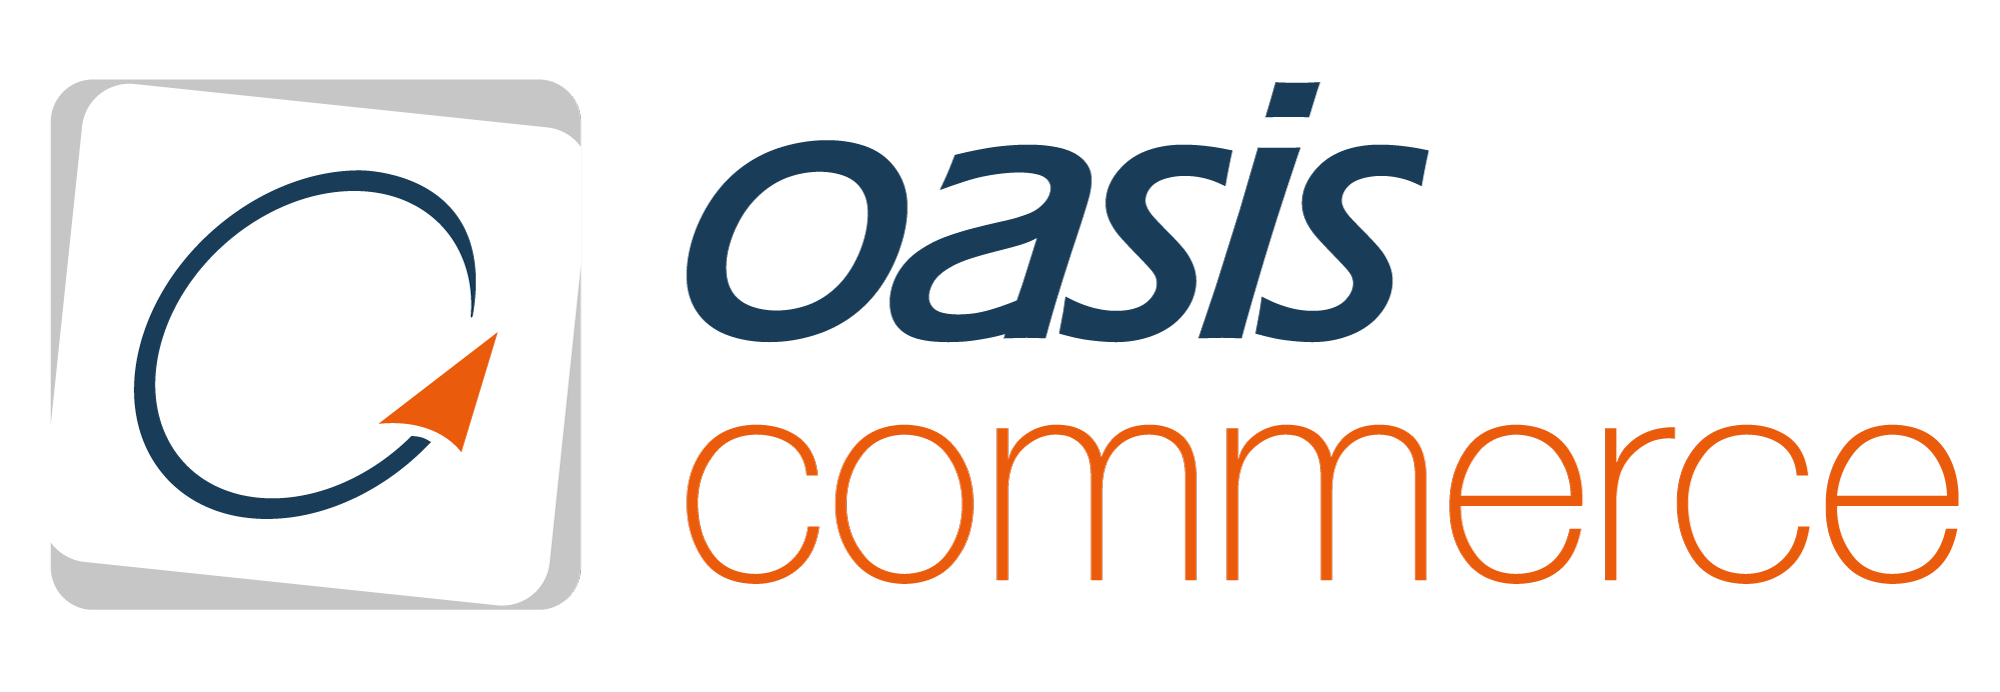 logo oasis commerce